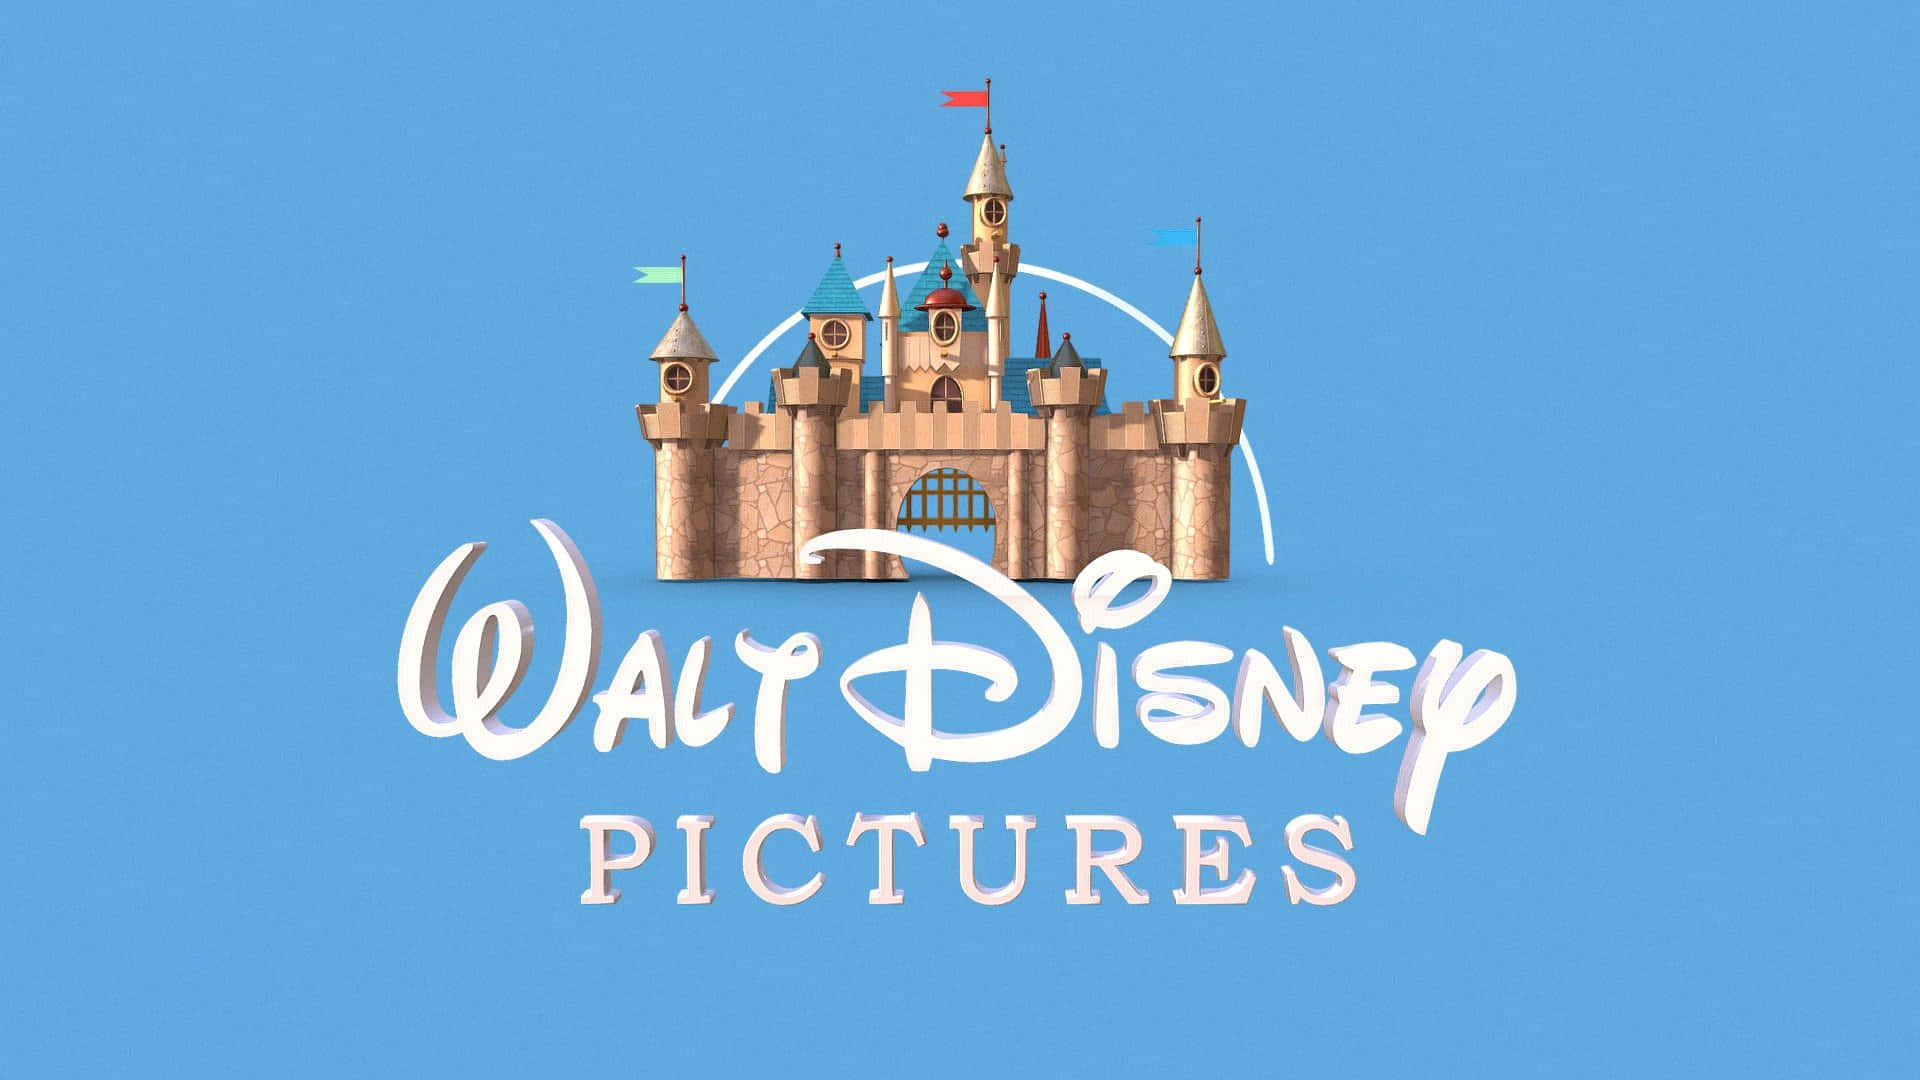 Logode Walt Disney Pictures